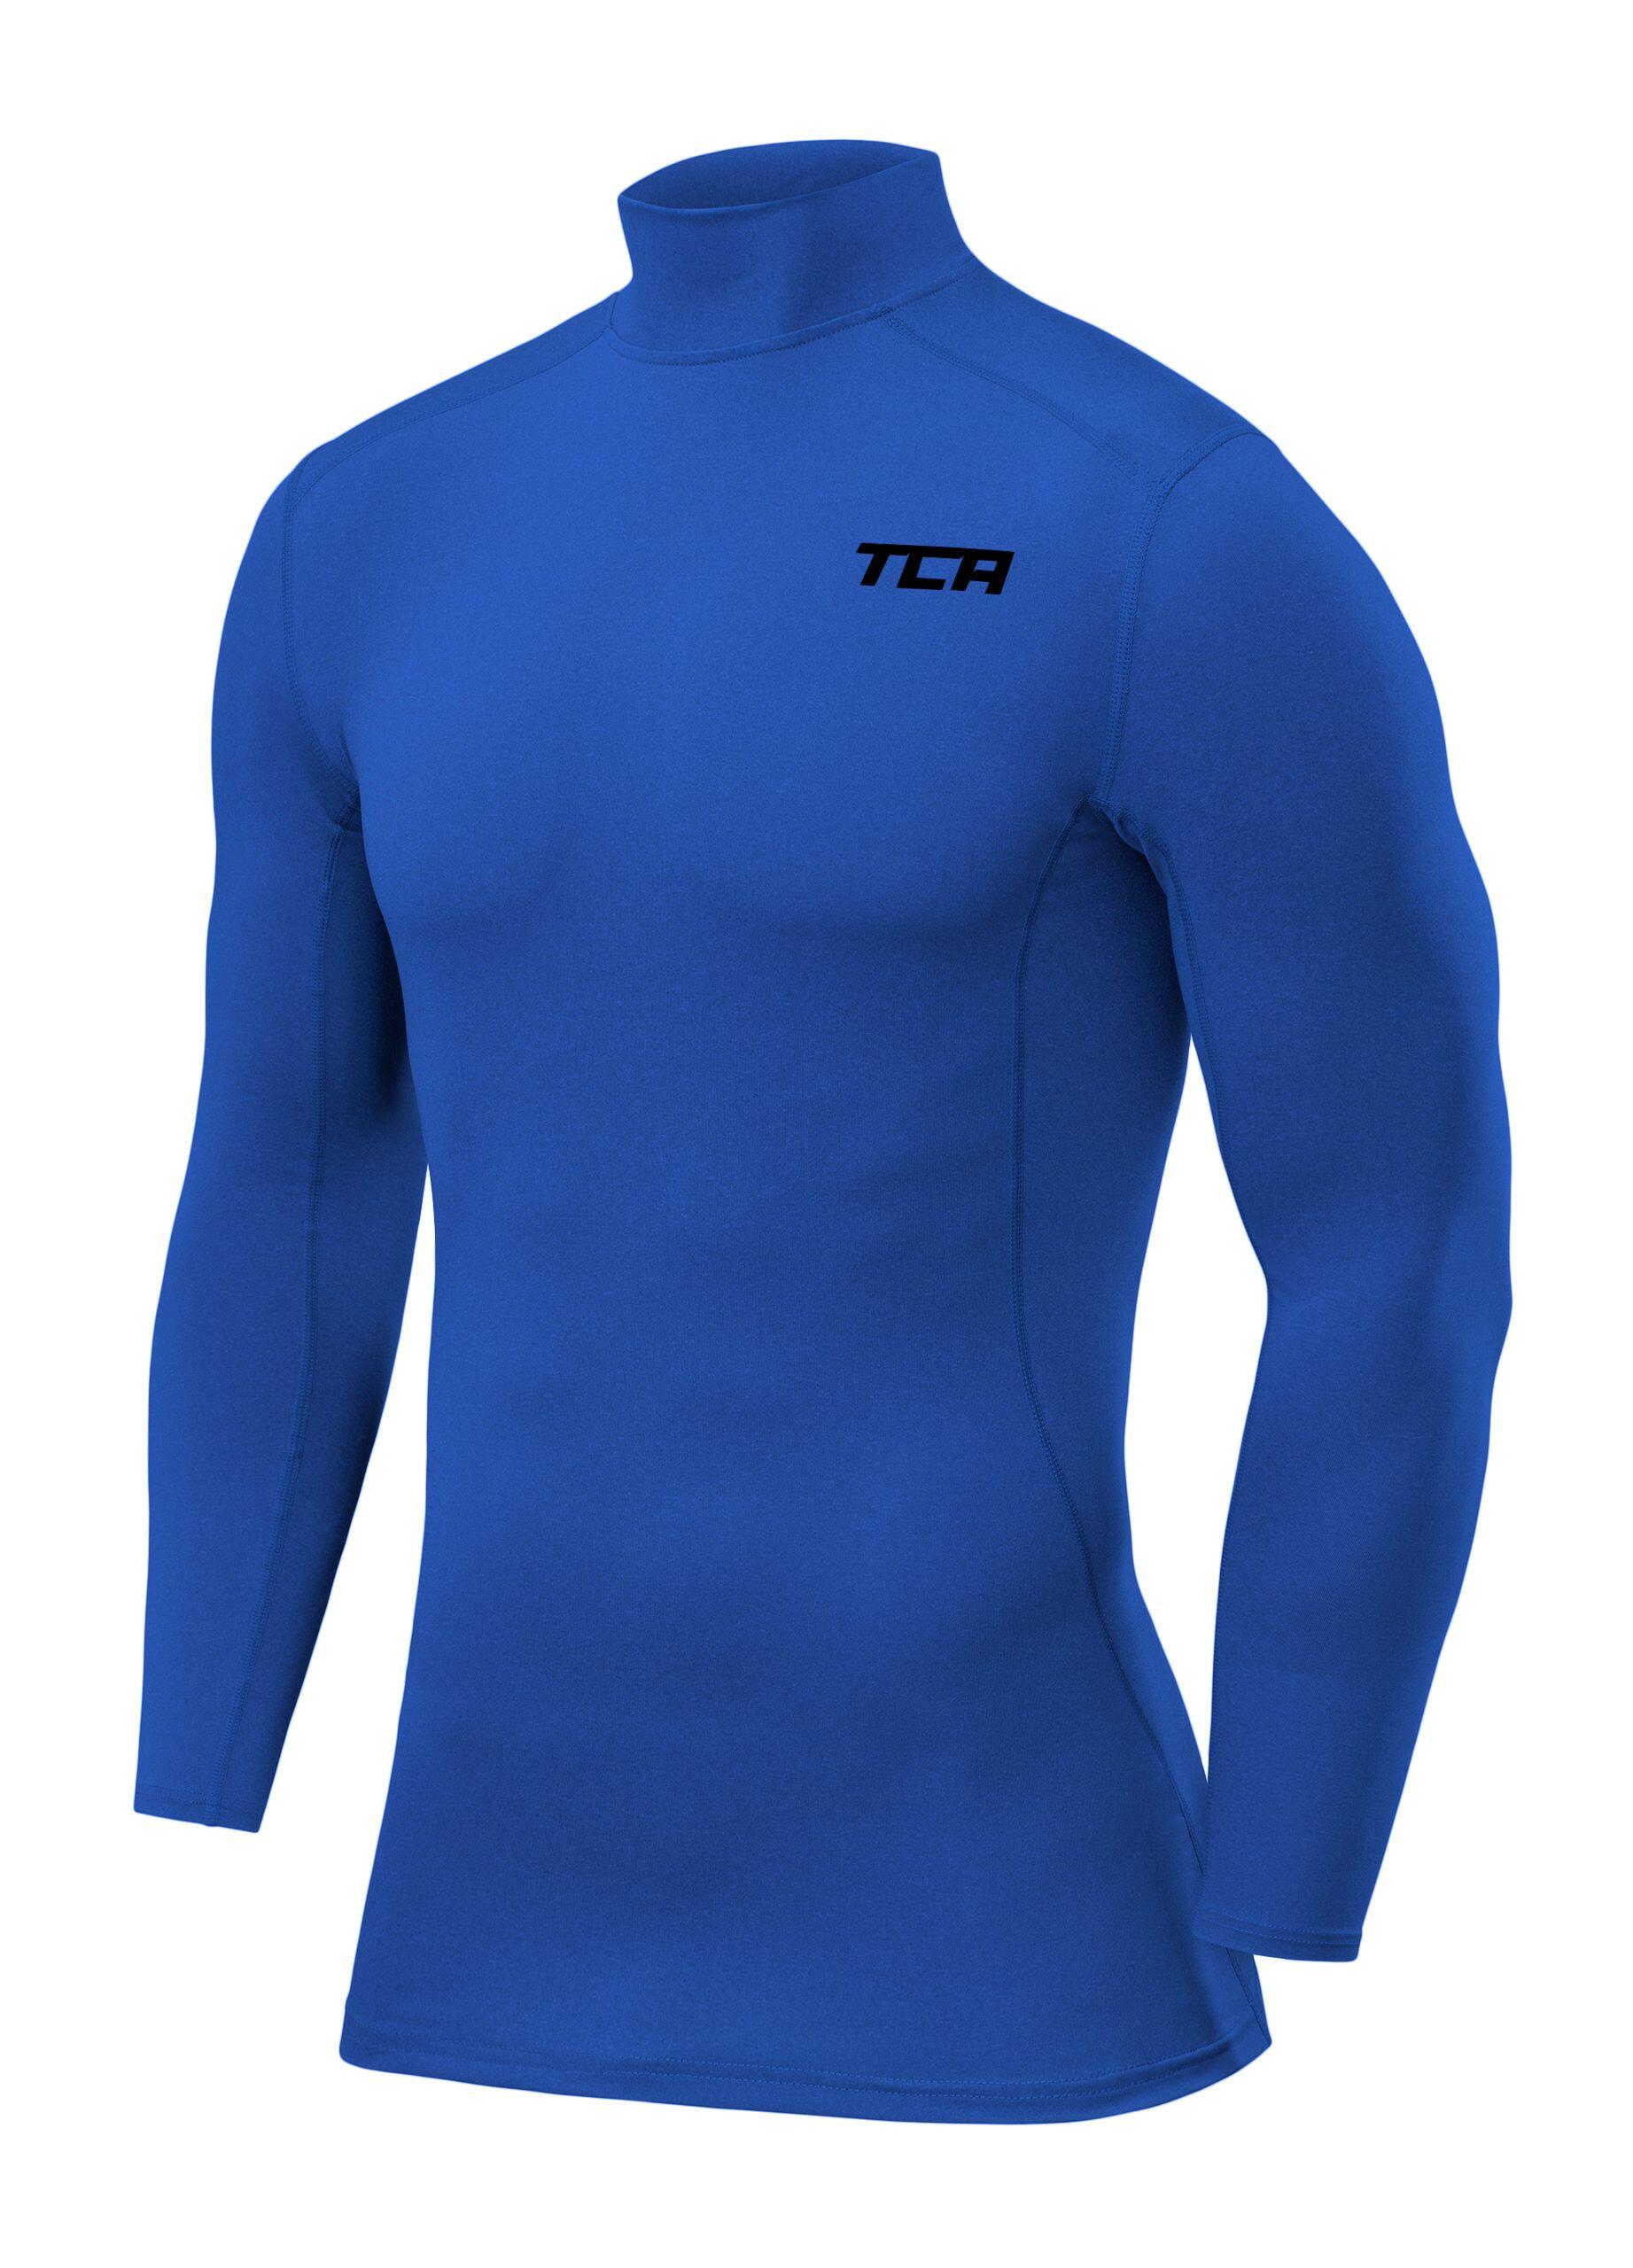 TCA Men's Performance Base Layer Compression Top - Mock - Dazzling Blue